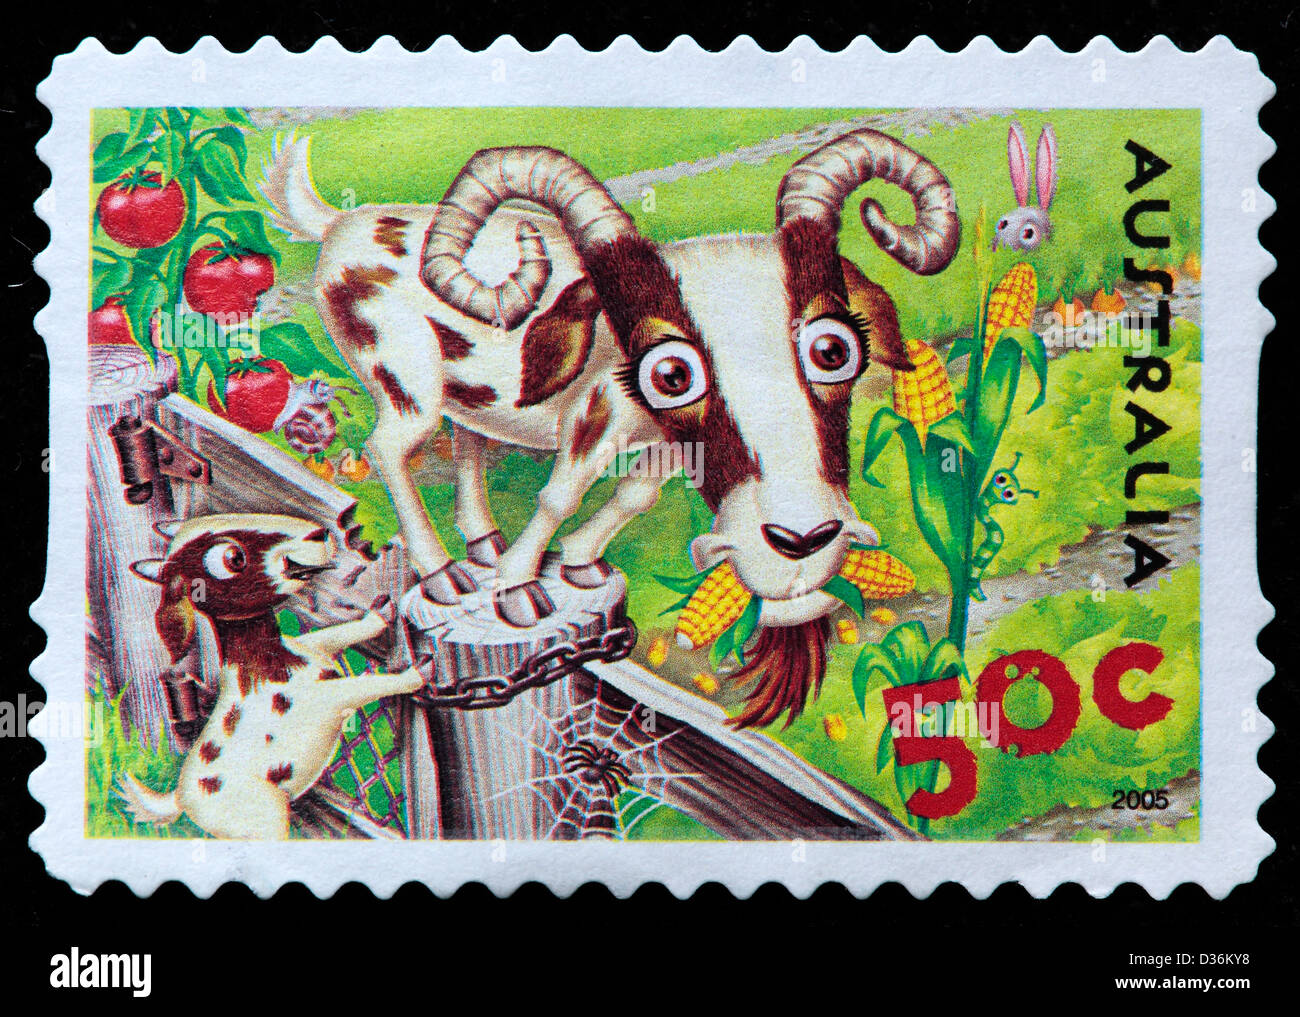 goats postage stamp australia 2005 D36KY8